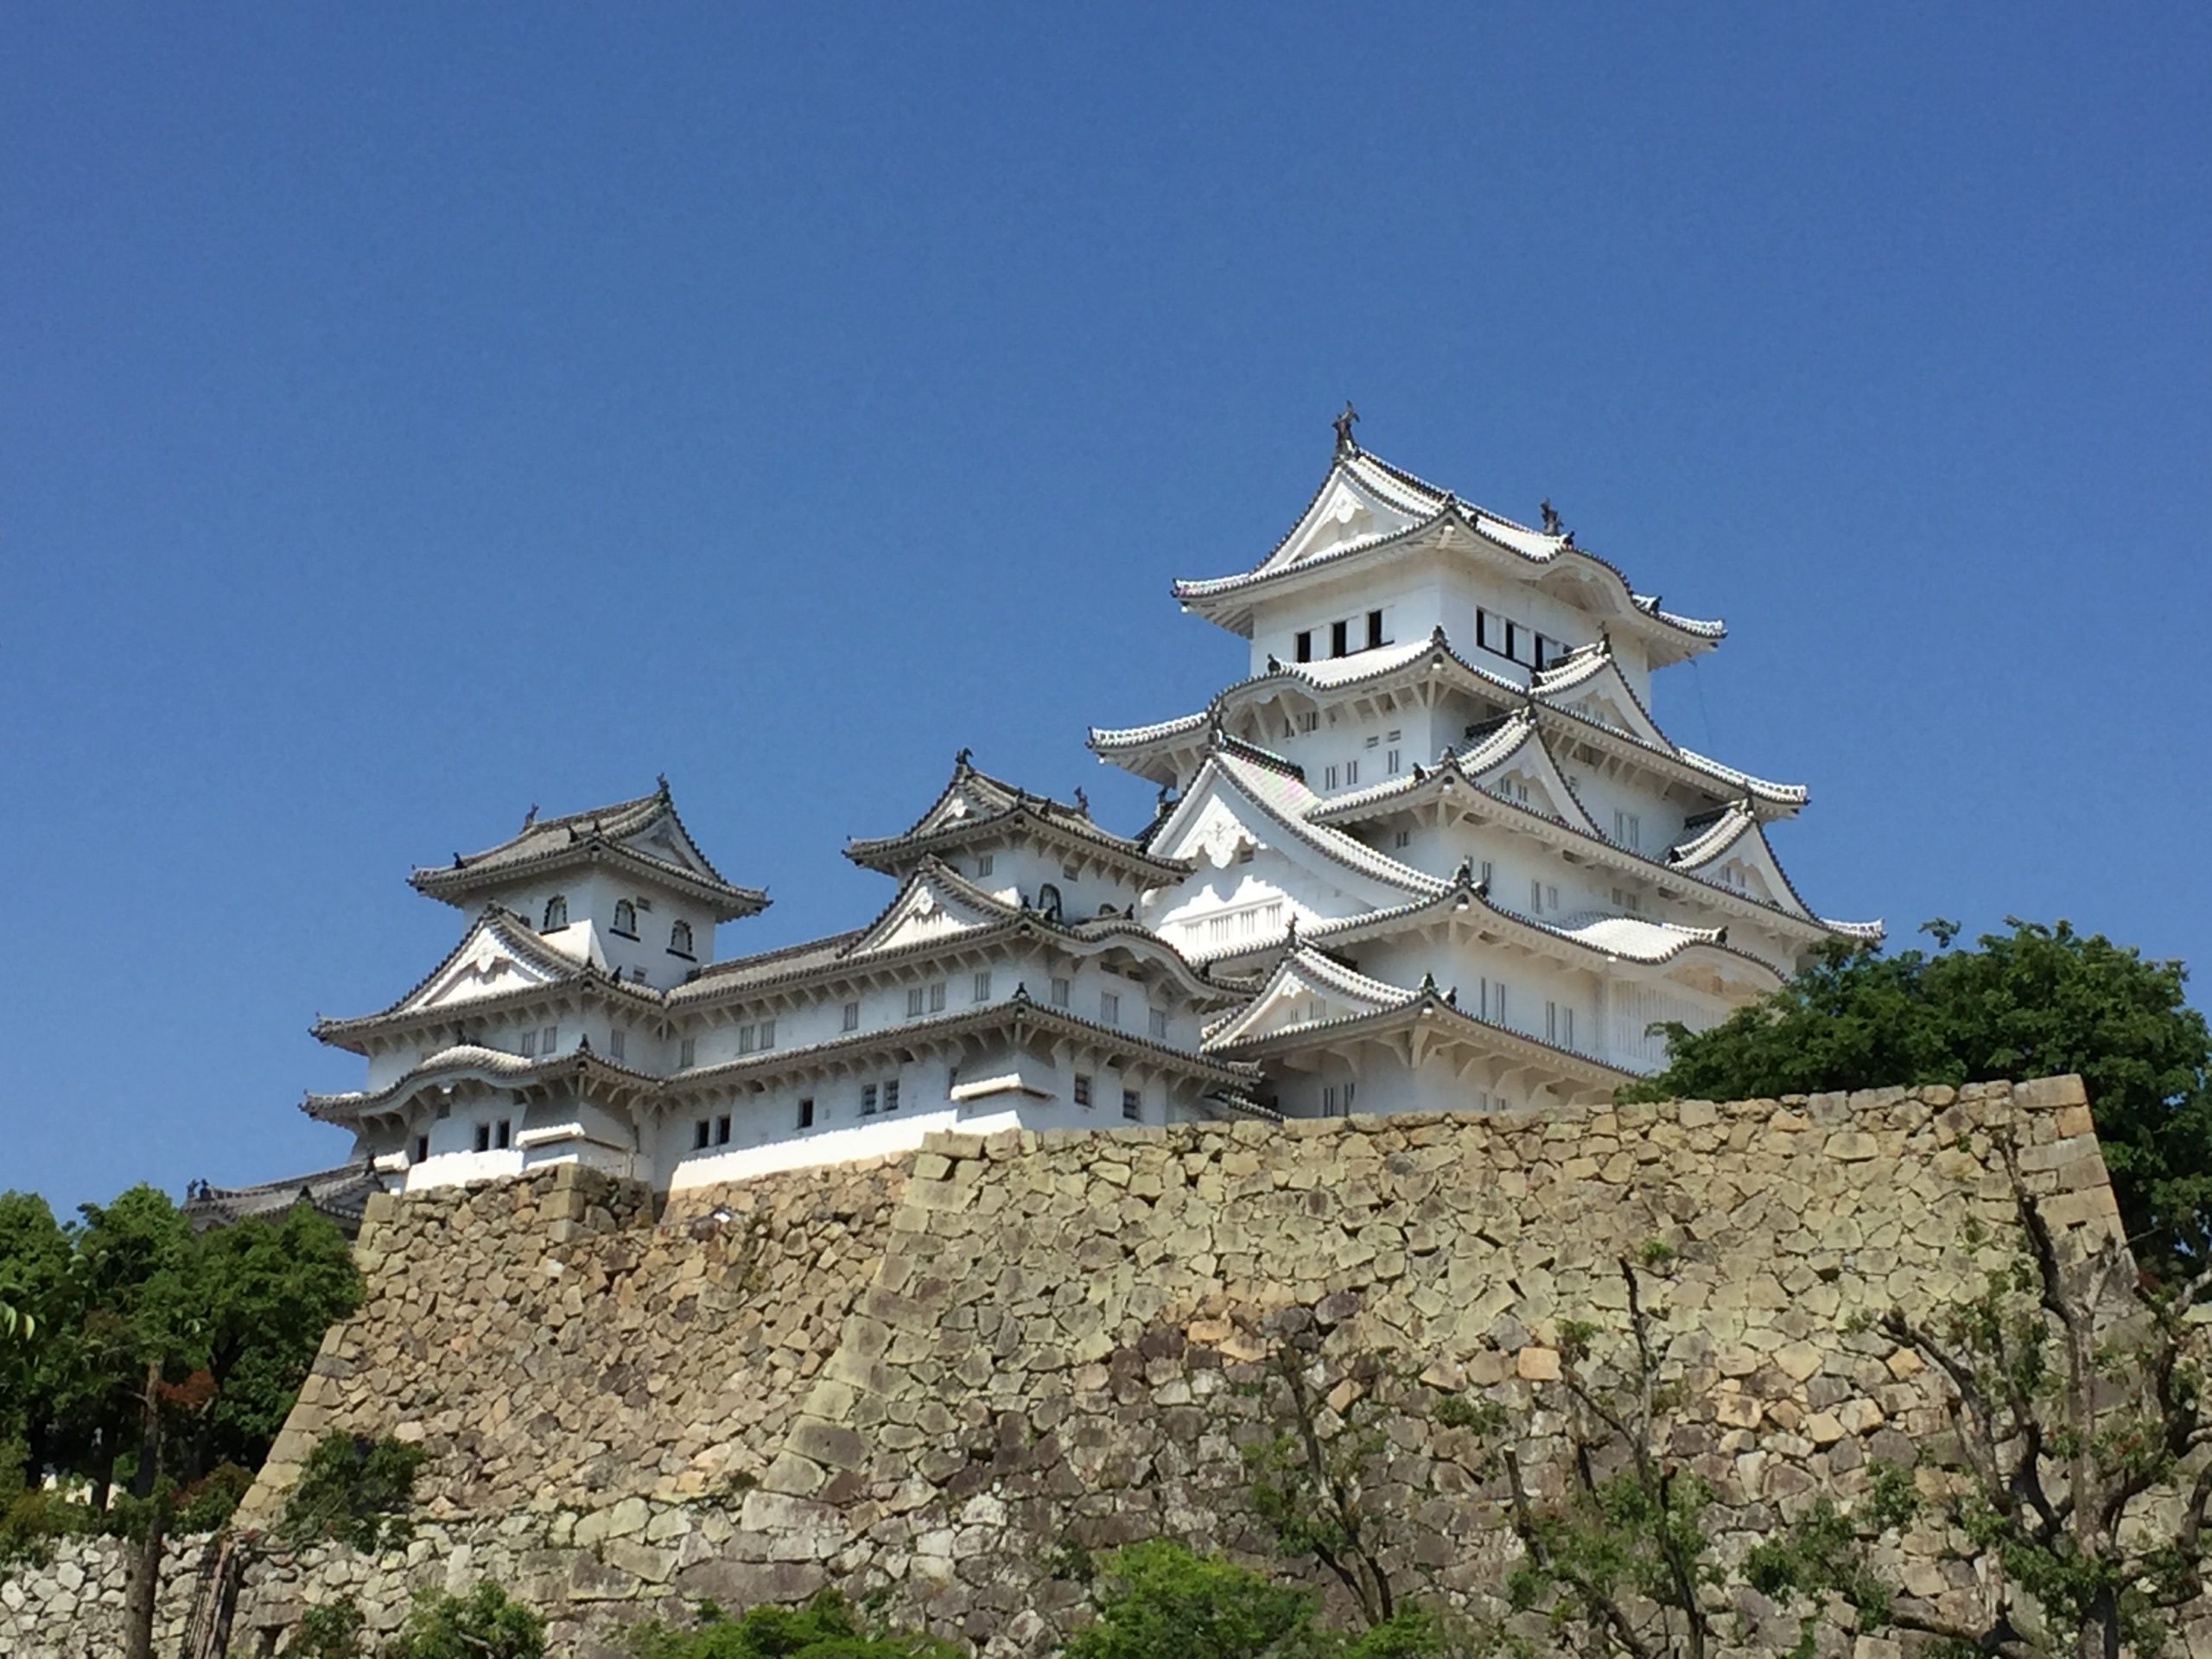 Chateau de Himeji